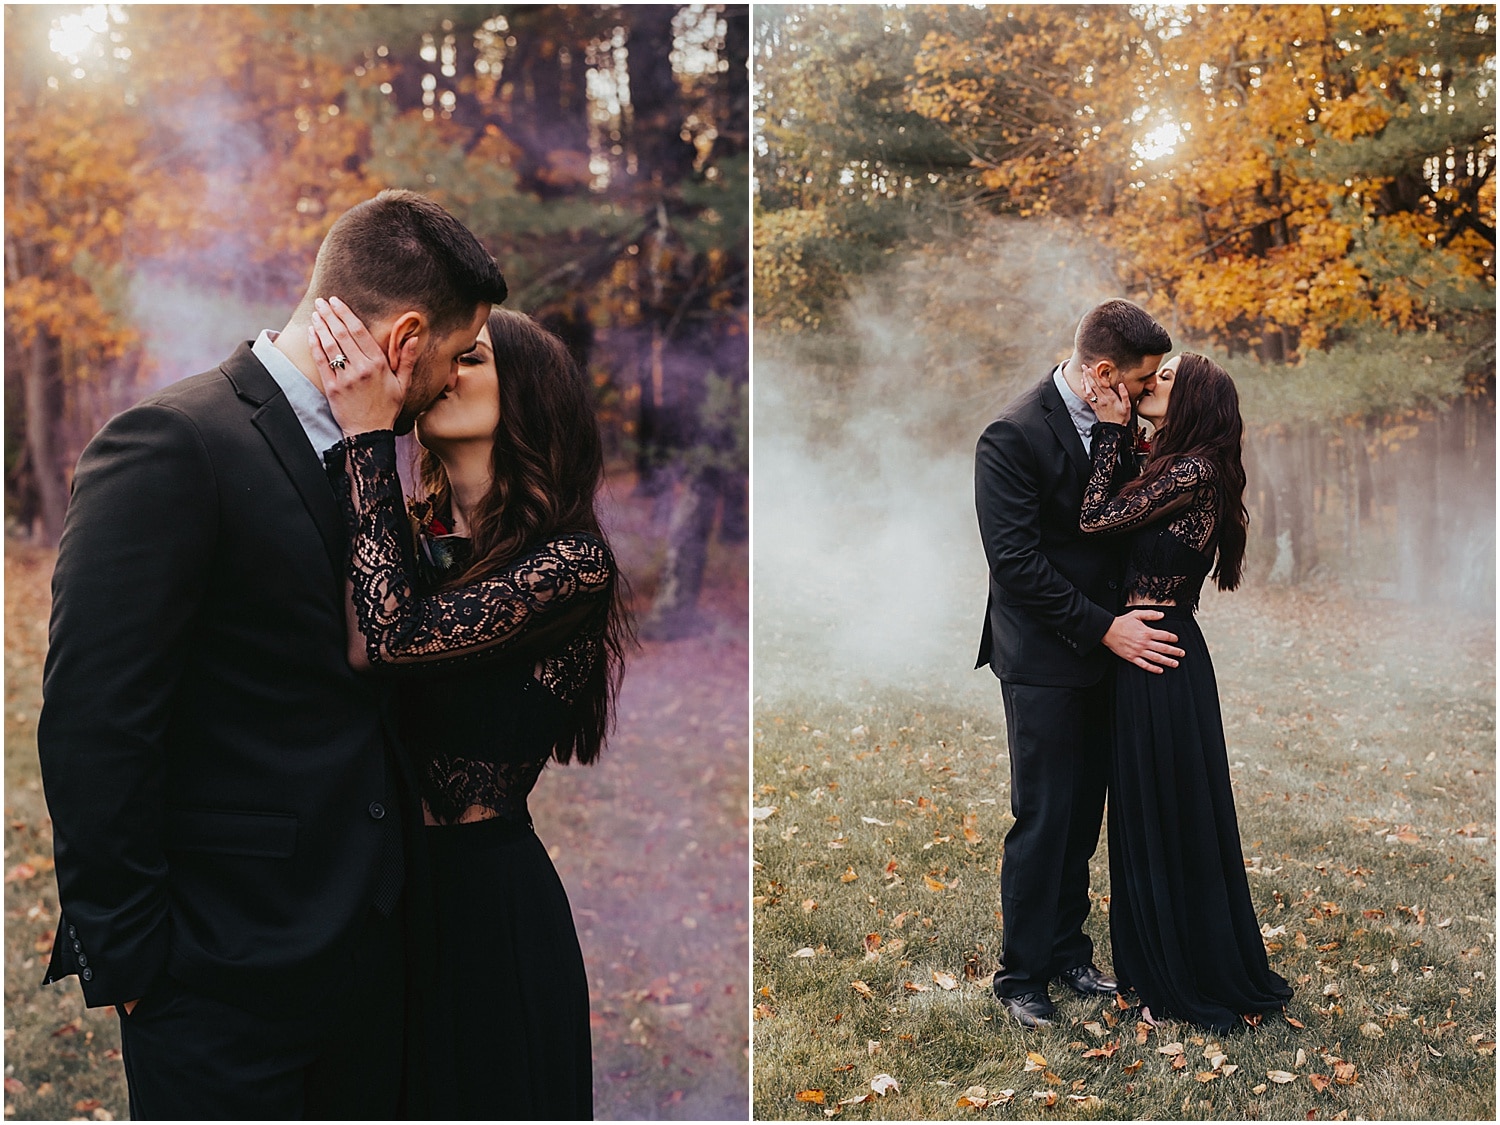 couple kissing in smoke bombs during halloween wedding inspiration photoshoot